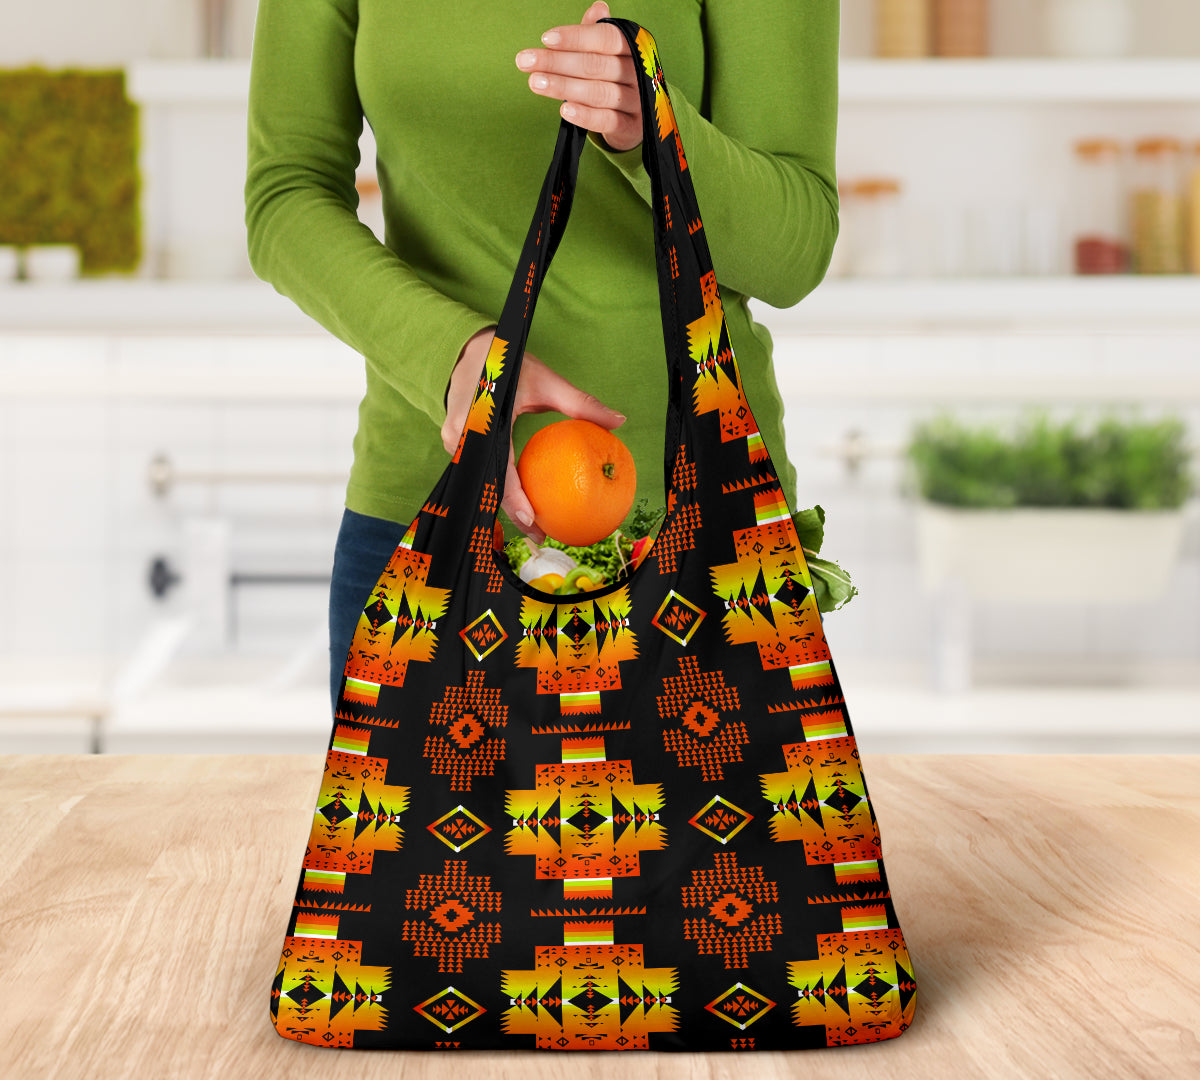 Powwow Storepattern grocery bag 3 pack set 34